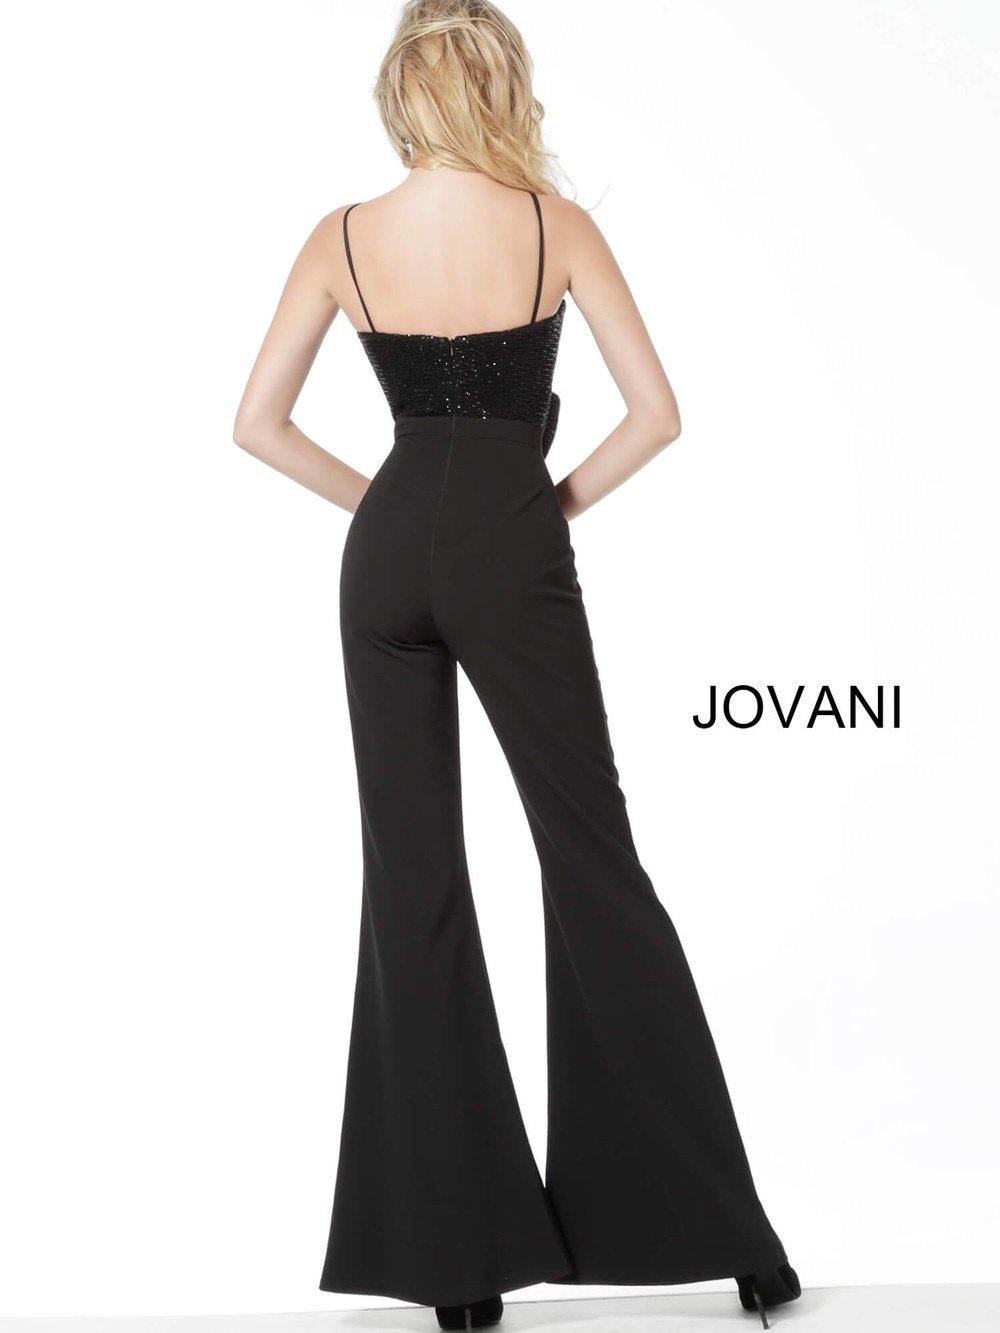 Jovani Bell Pants Evening Jumpsuit JVN18891 - The Dress Outlet